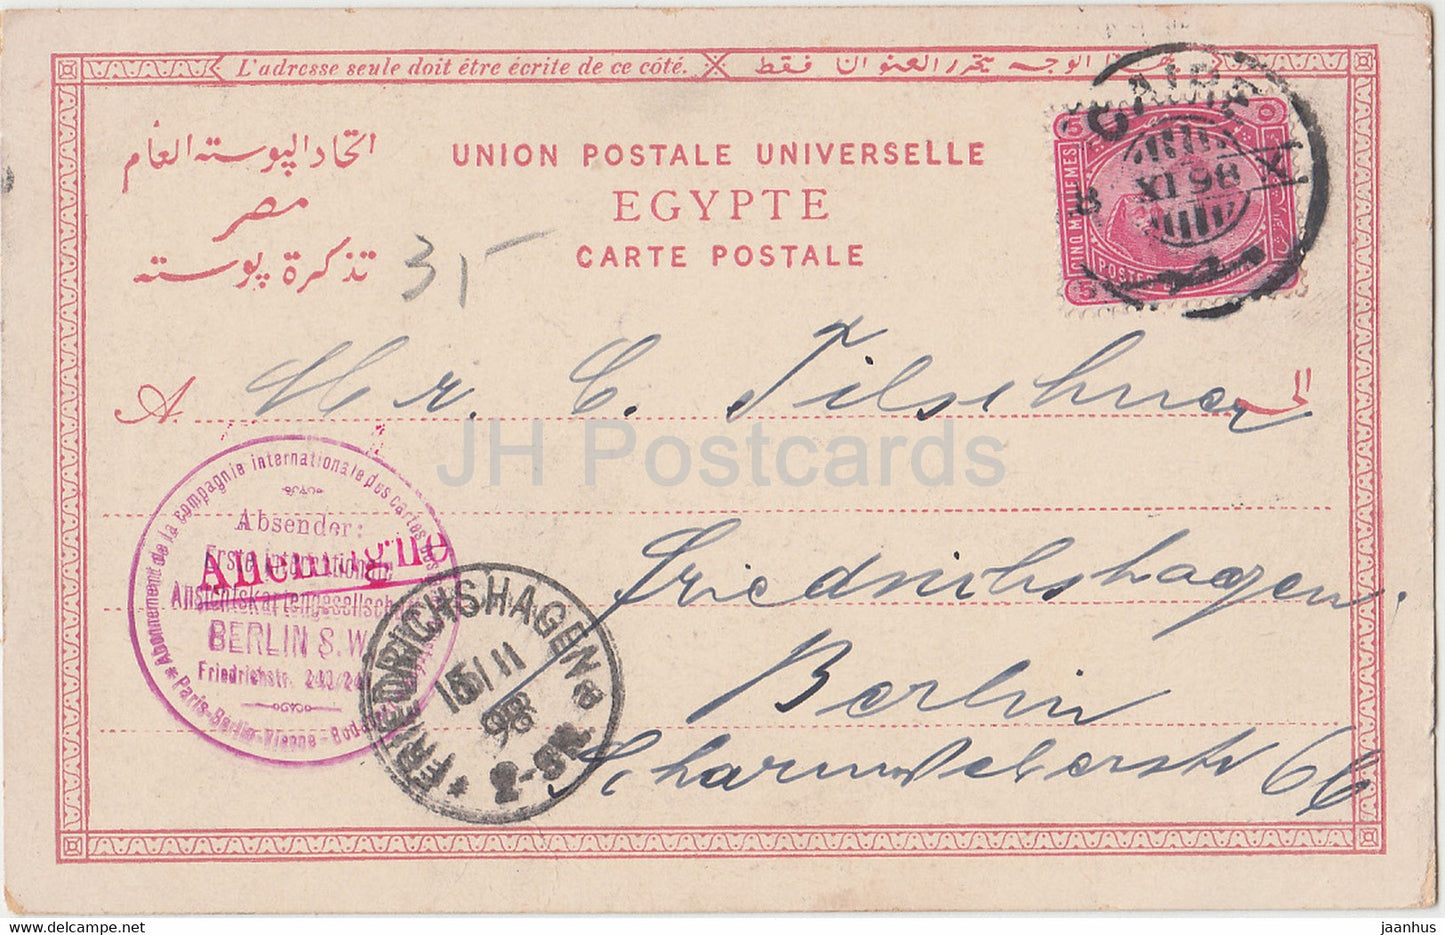 Le Caire - vue - Von des gelben Wustensandes Gluthen - Mirza Schaffy - carte postale ancienne - 1898 - Egypte - utilisé